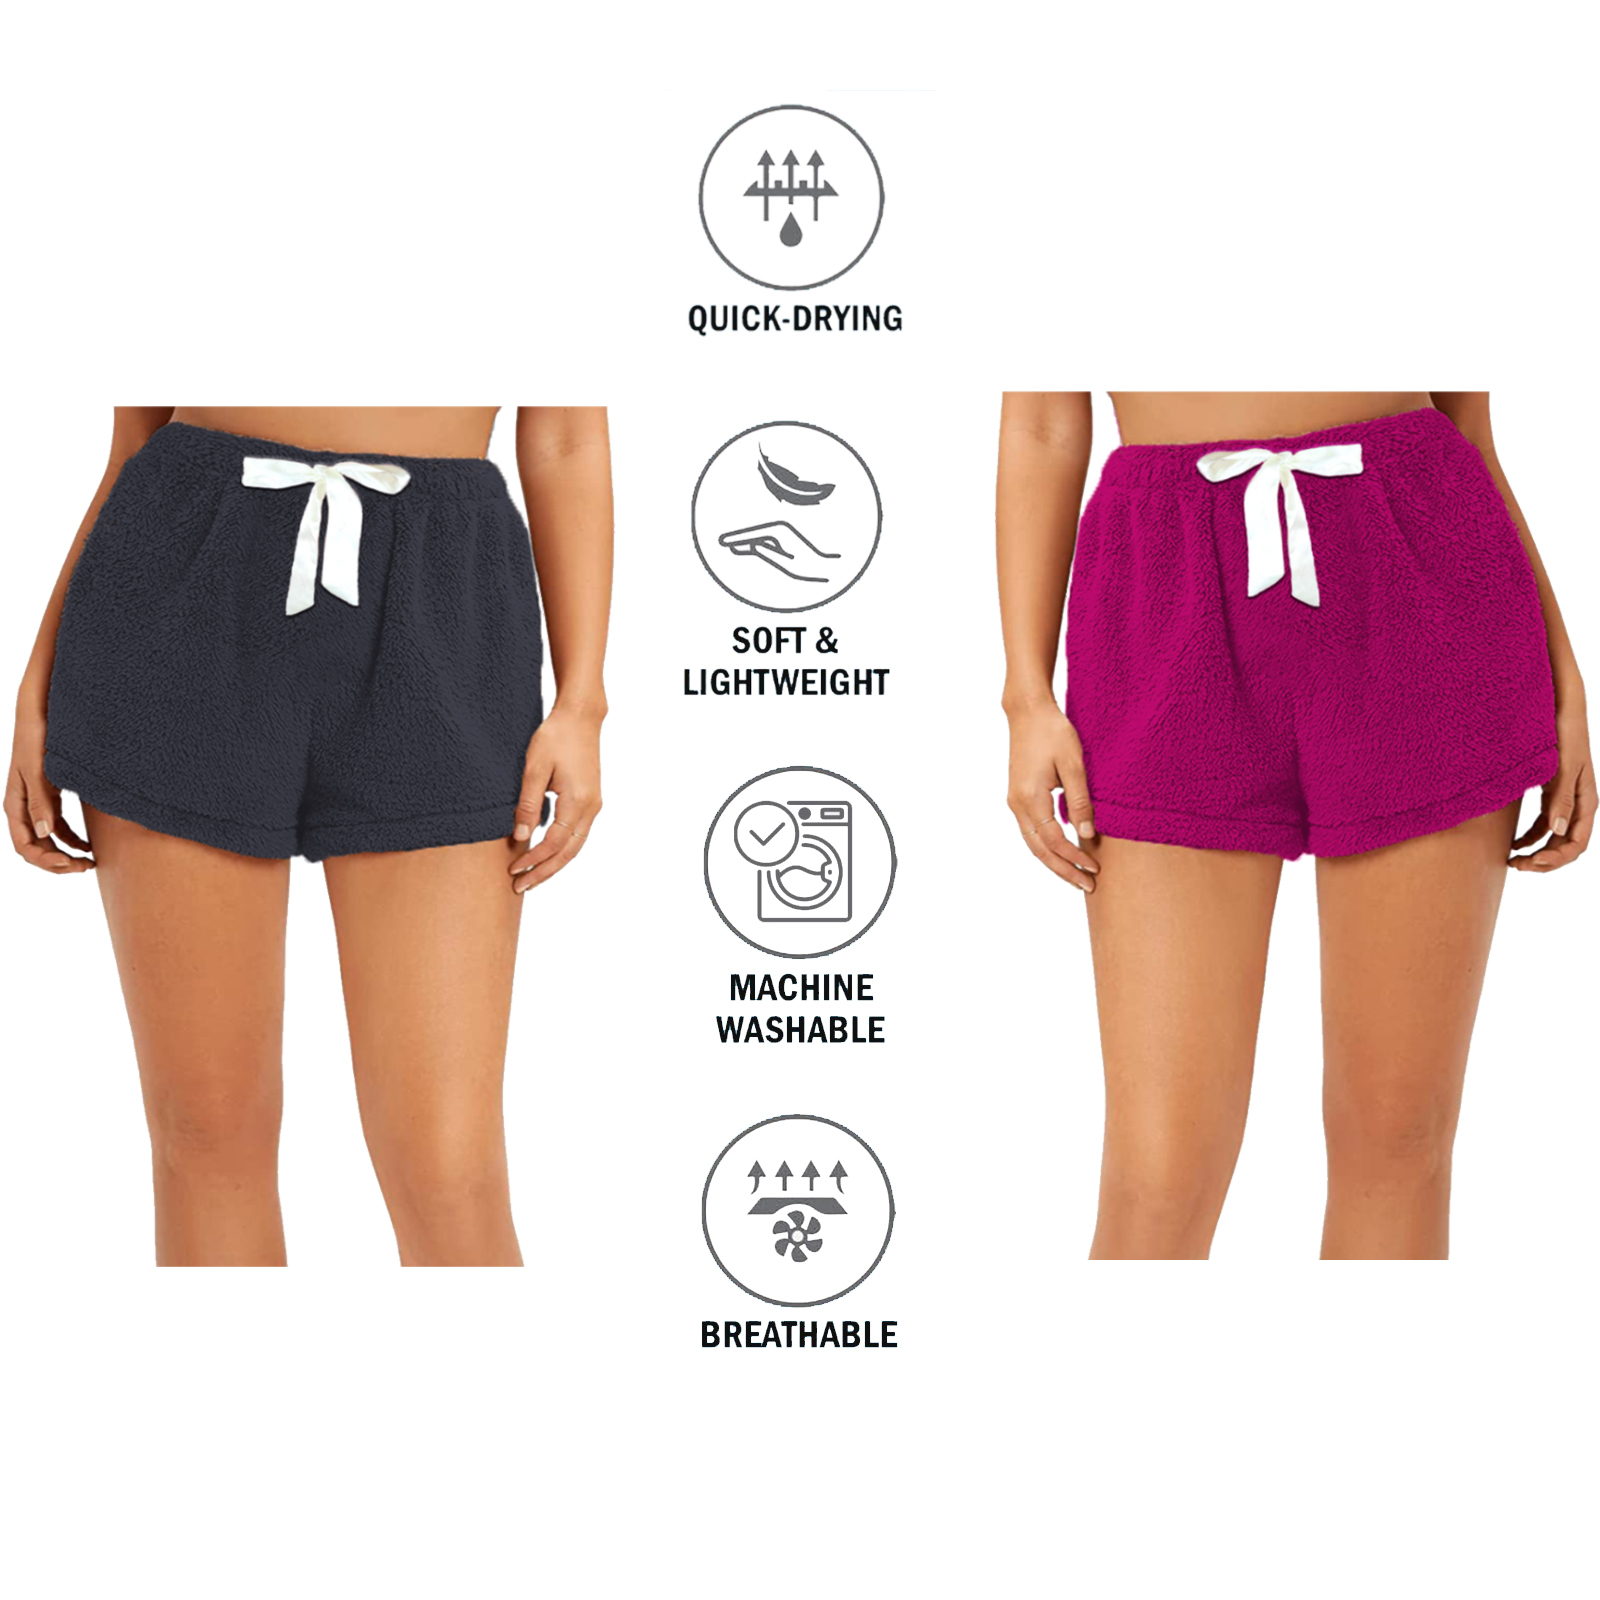 5-Pack: Women's Super Soft Micro Fleece Ultra Plush Pajama Shorts - Print, Medium